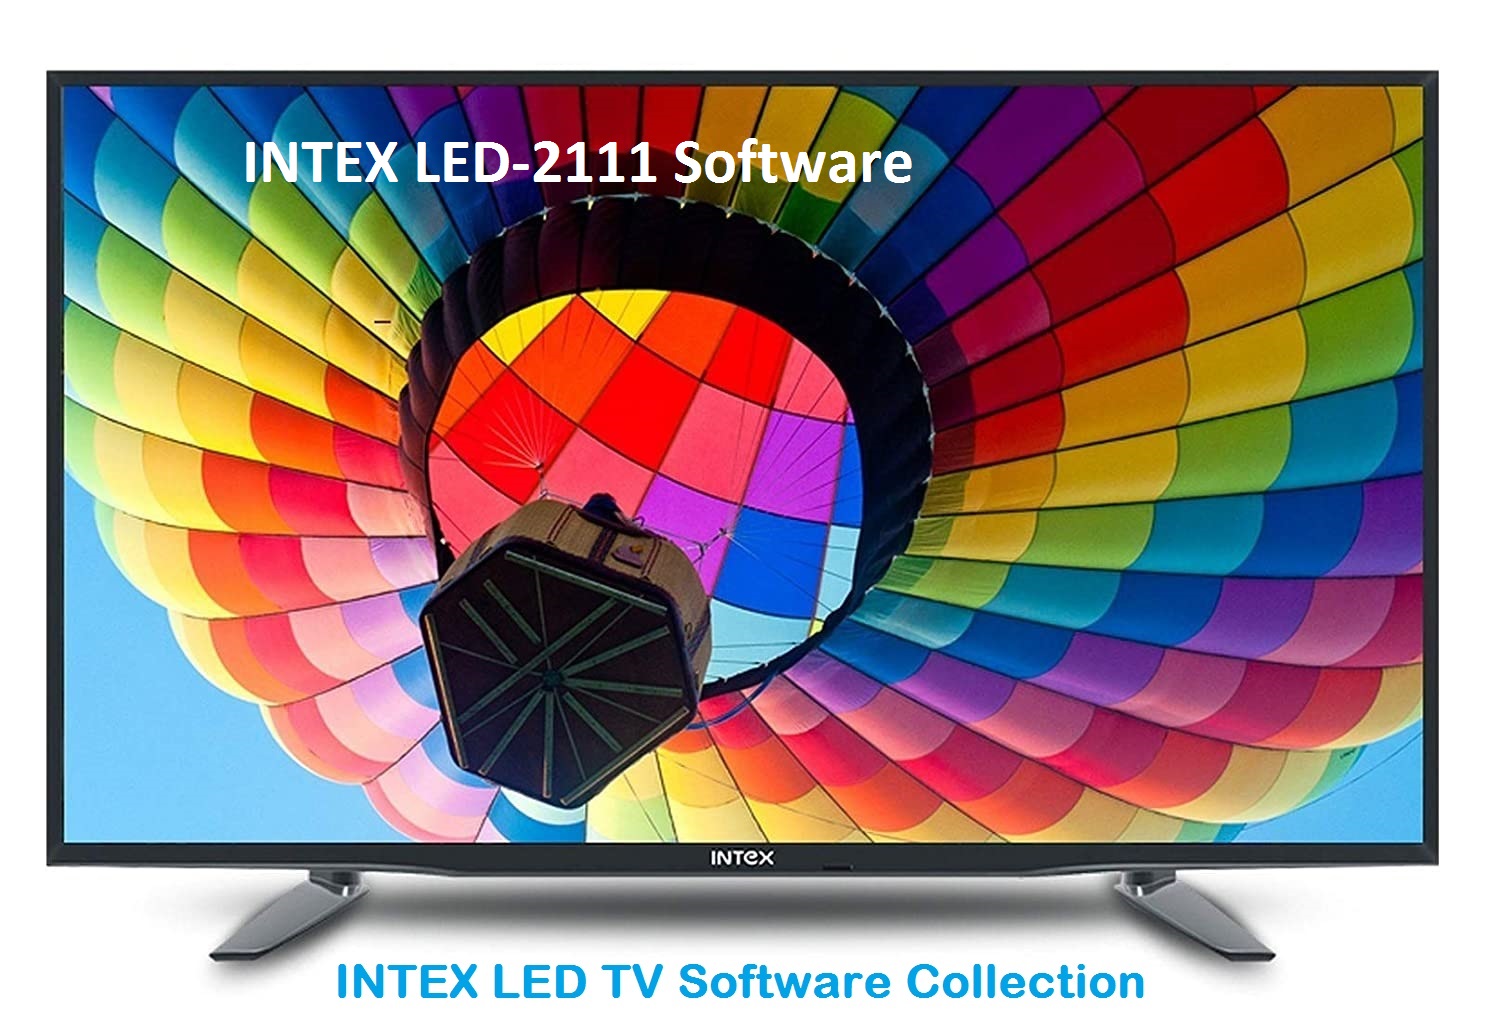 Intex Led-2111